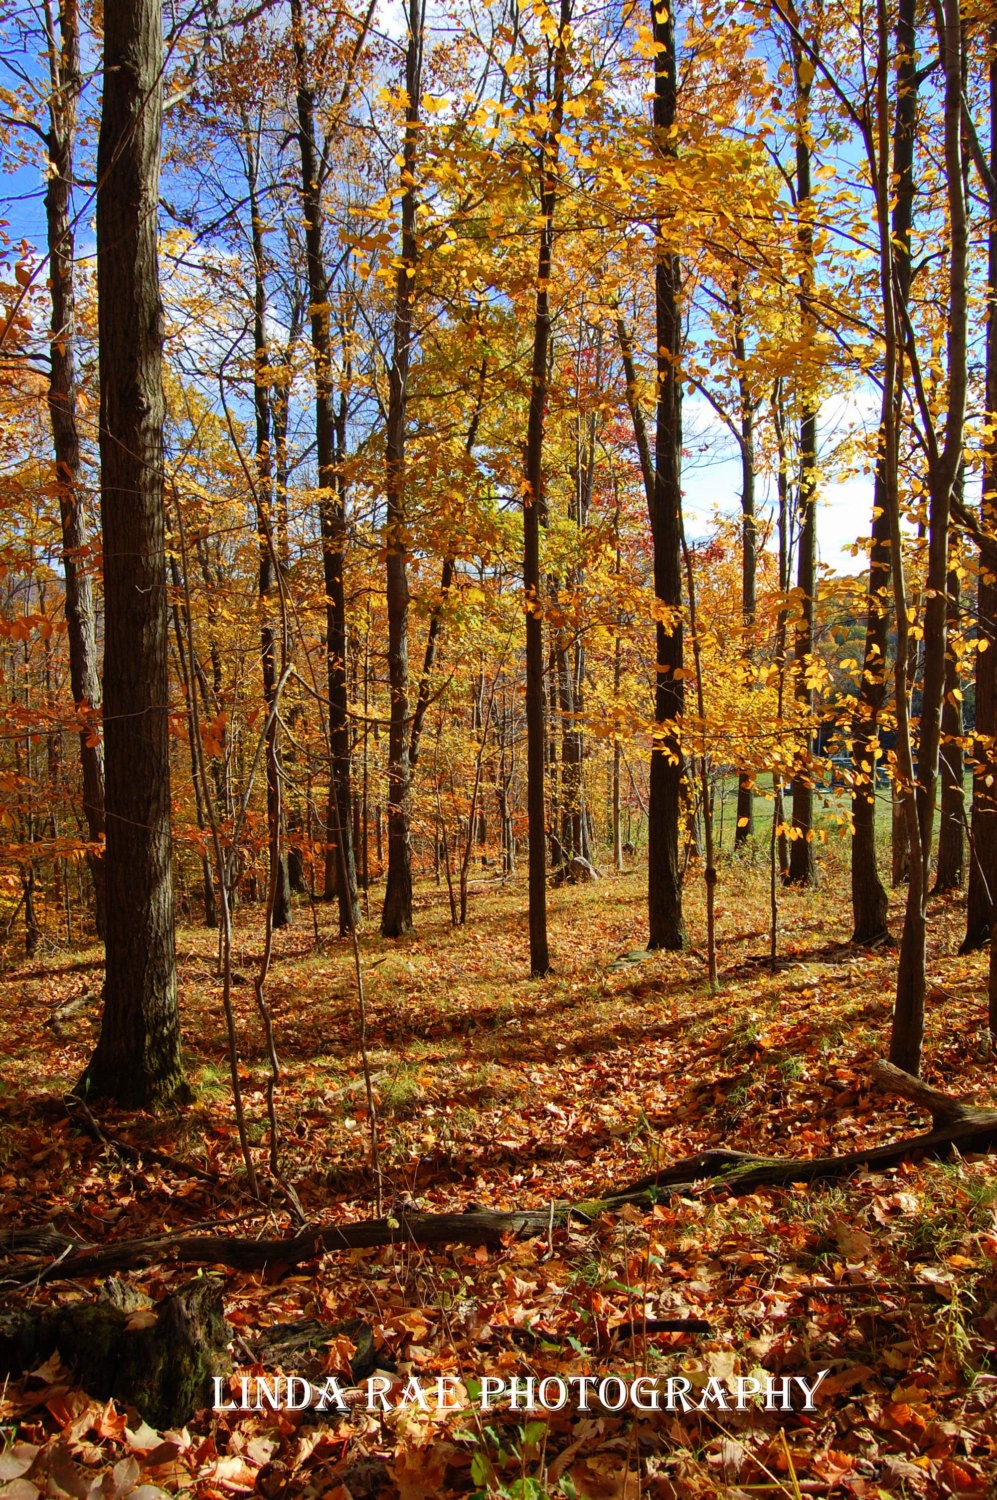 Fall Foliage 8 x 10 Photo, Forest, Trees, Fine Art Photography, Nature Landscape. Wall Decor, Home Decor, Office Decor - LindaRaeImages